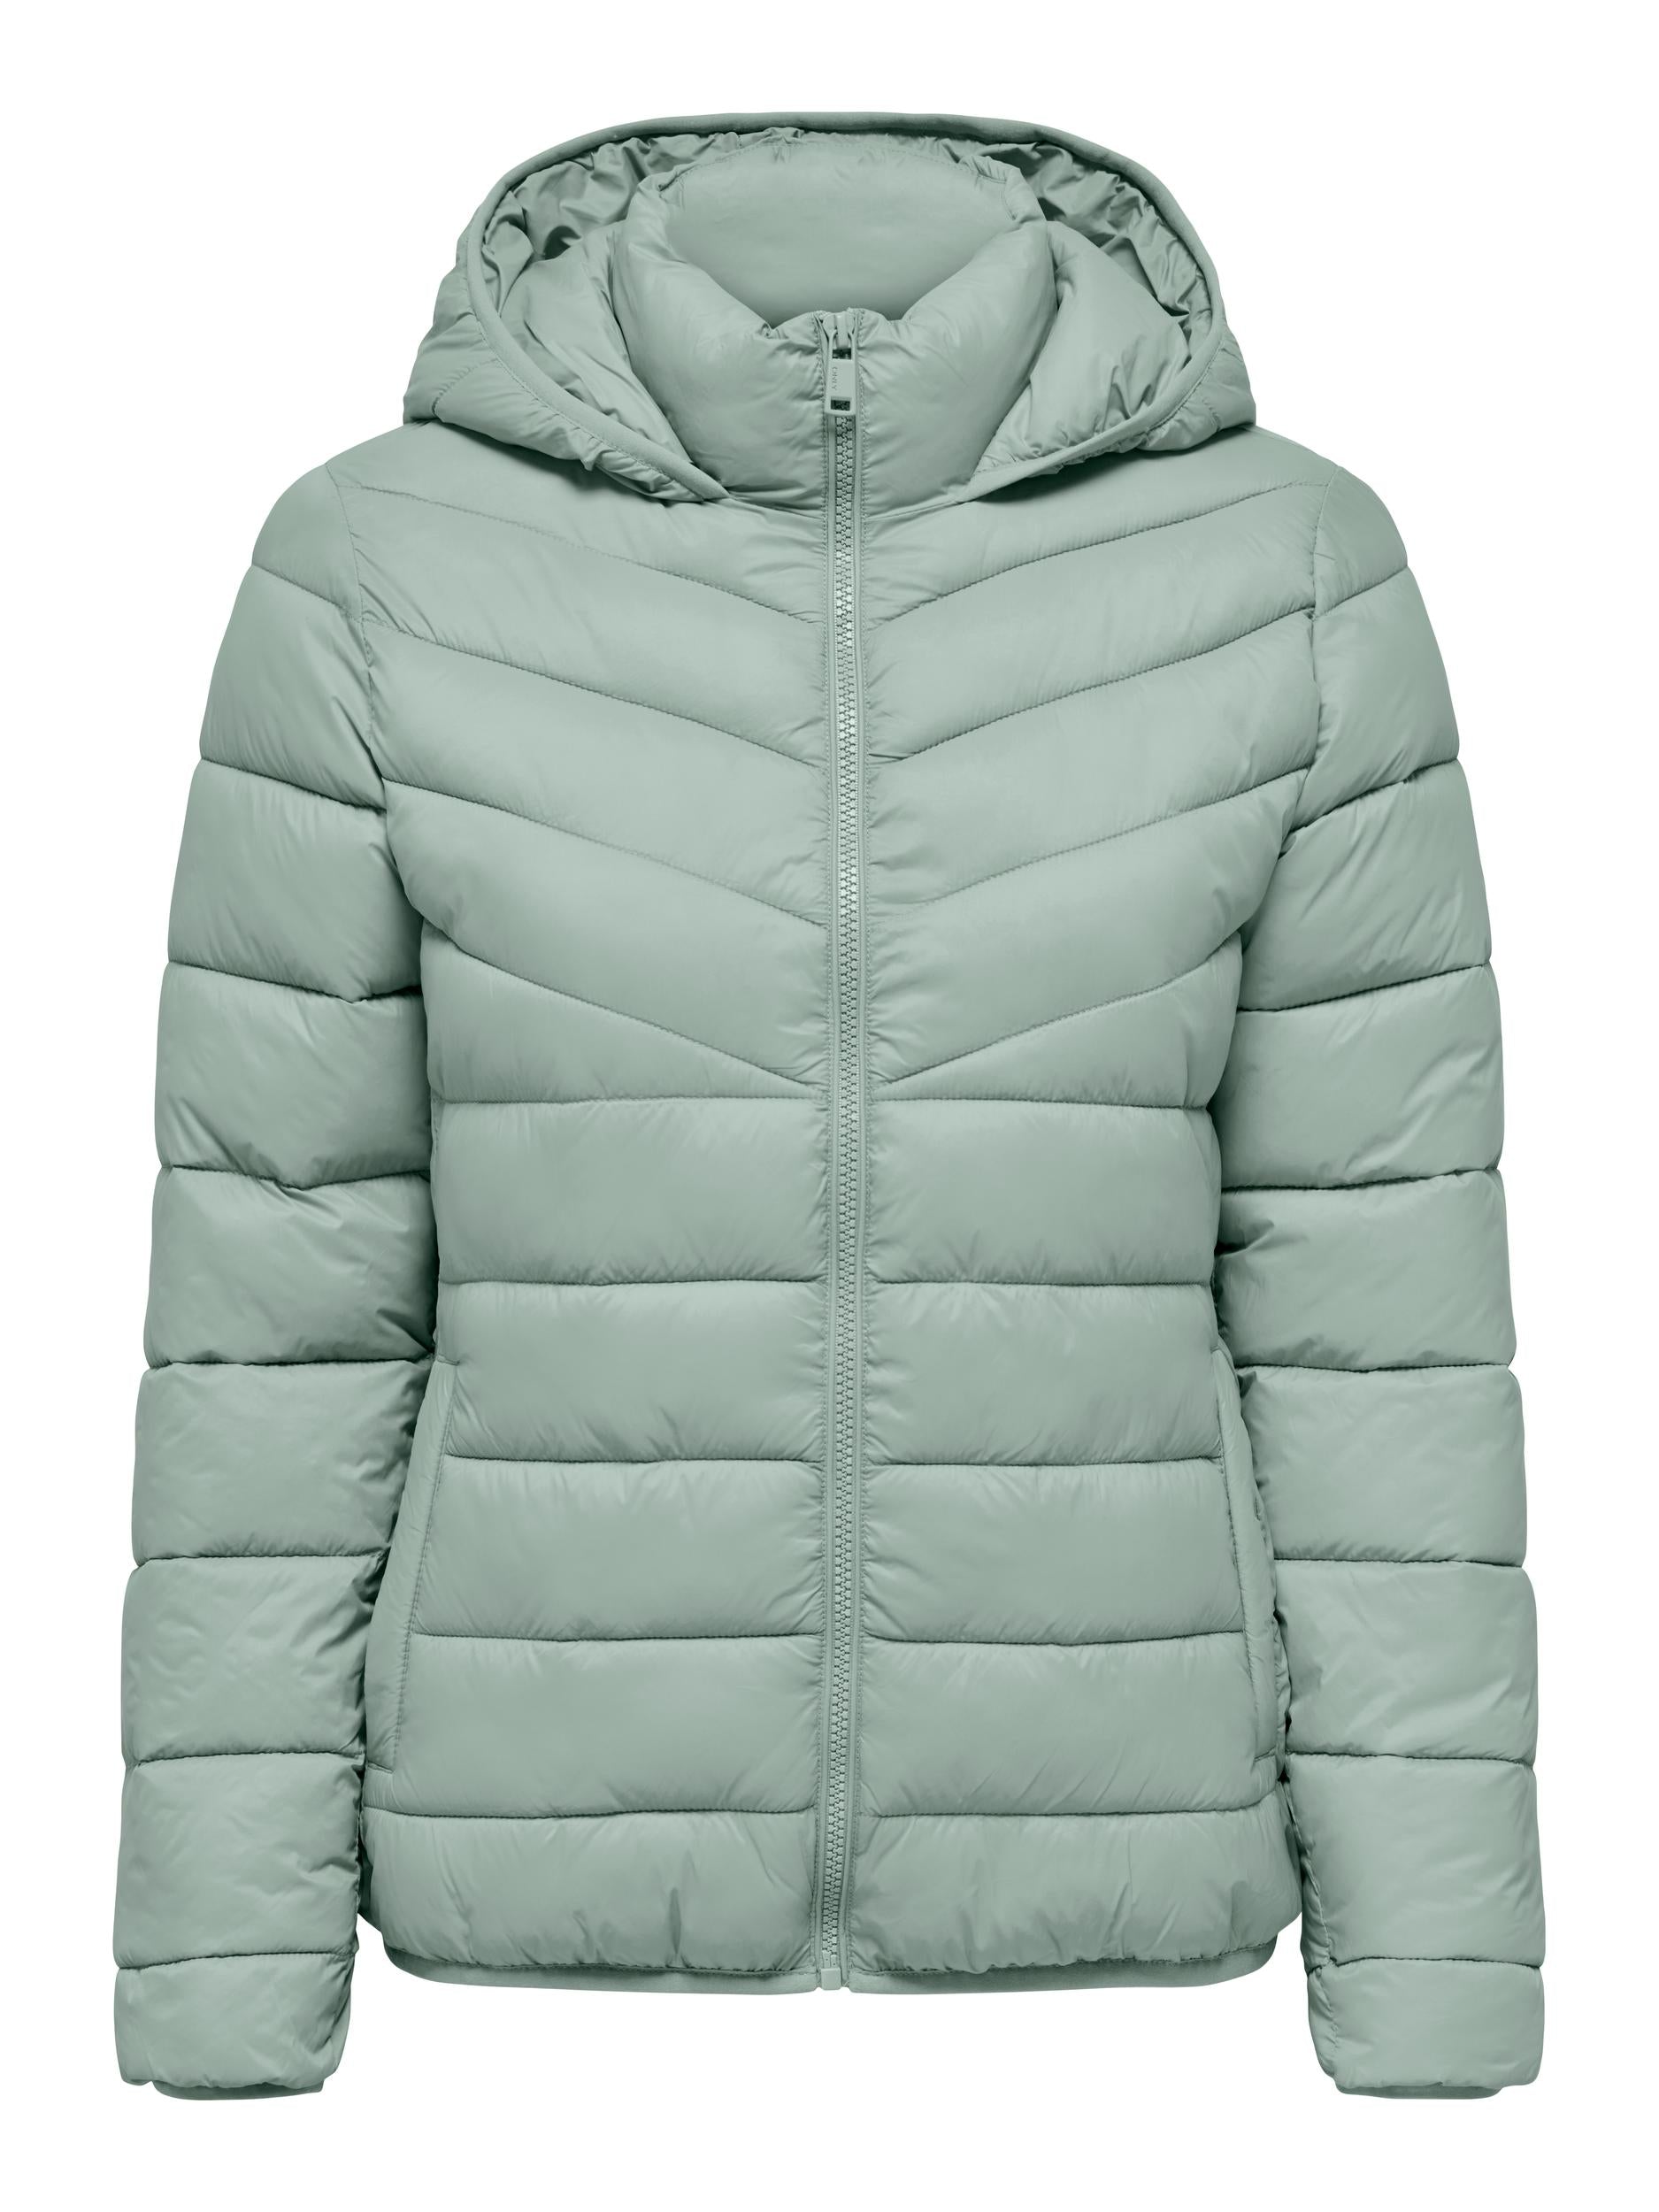 Ladies Tahoe Hood Fitted Aqua Gray Jacket-Front View